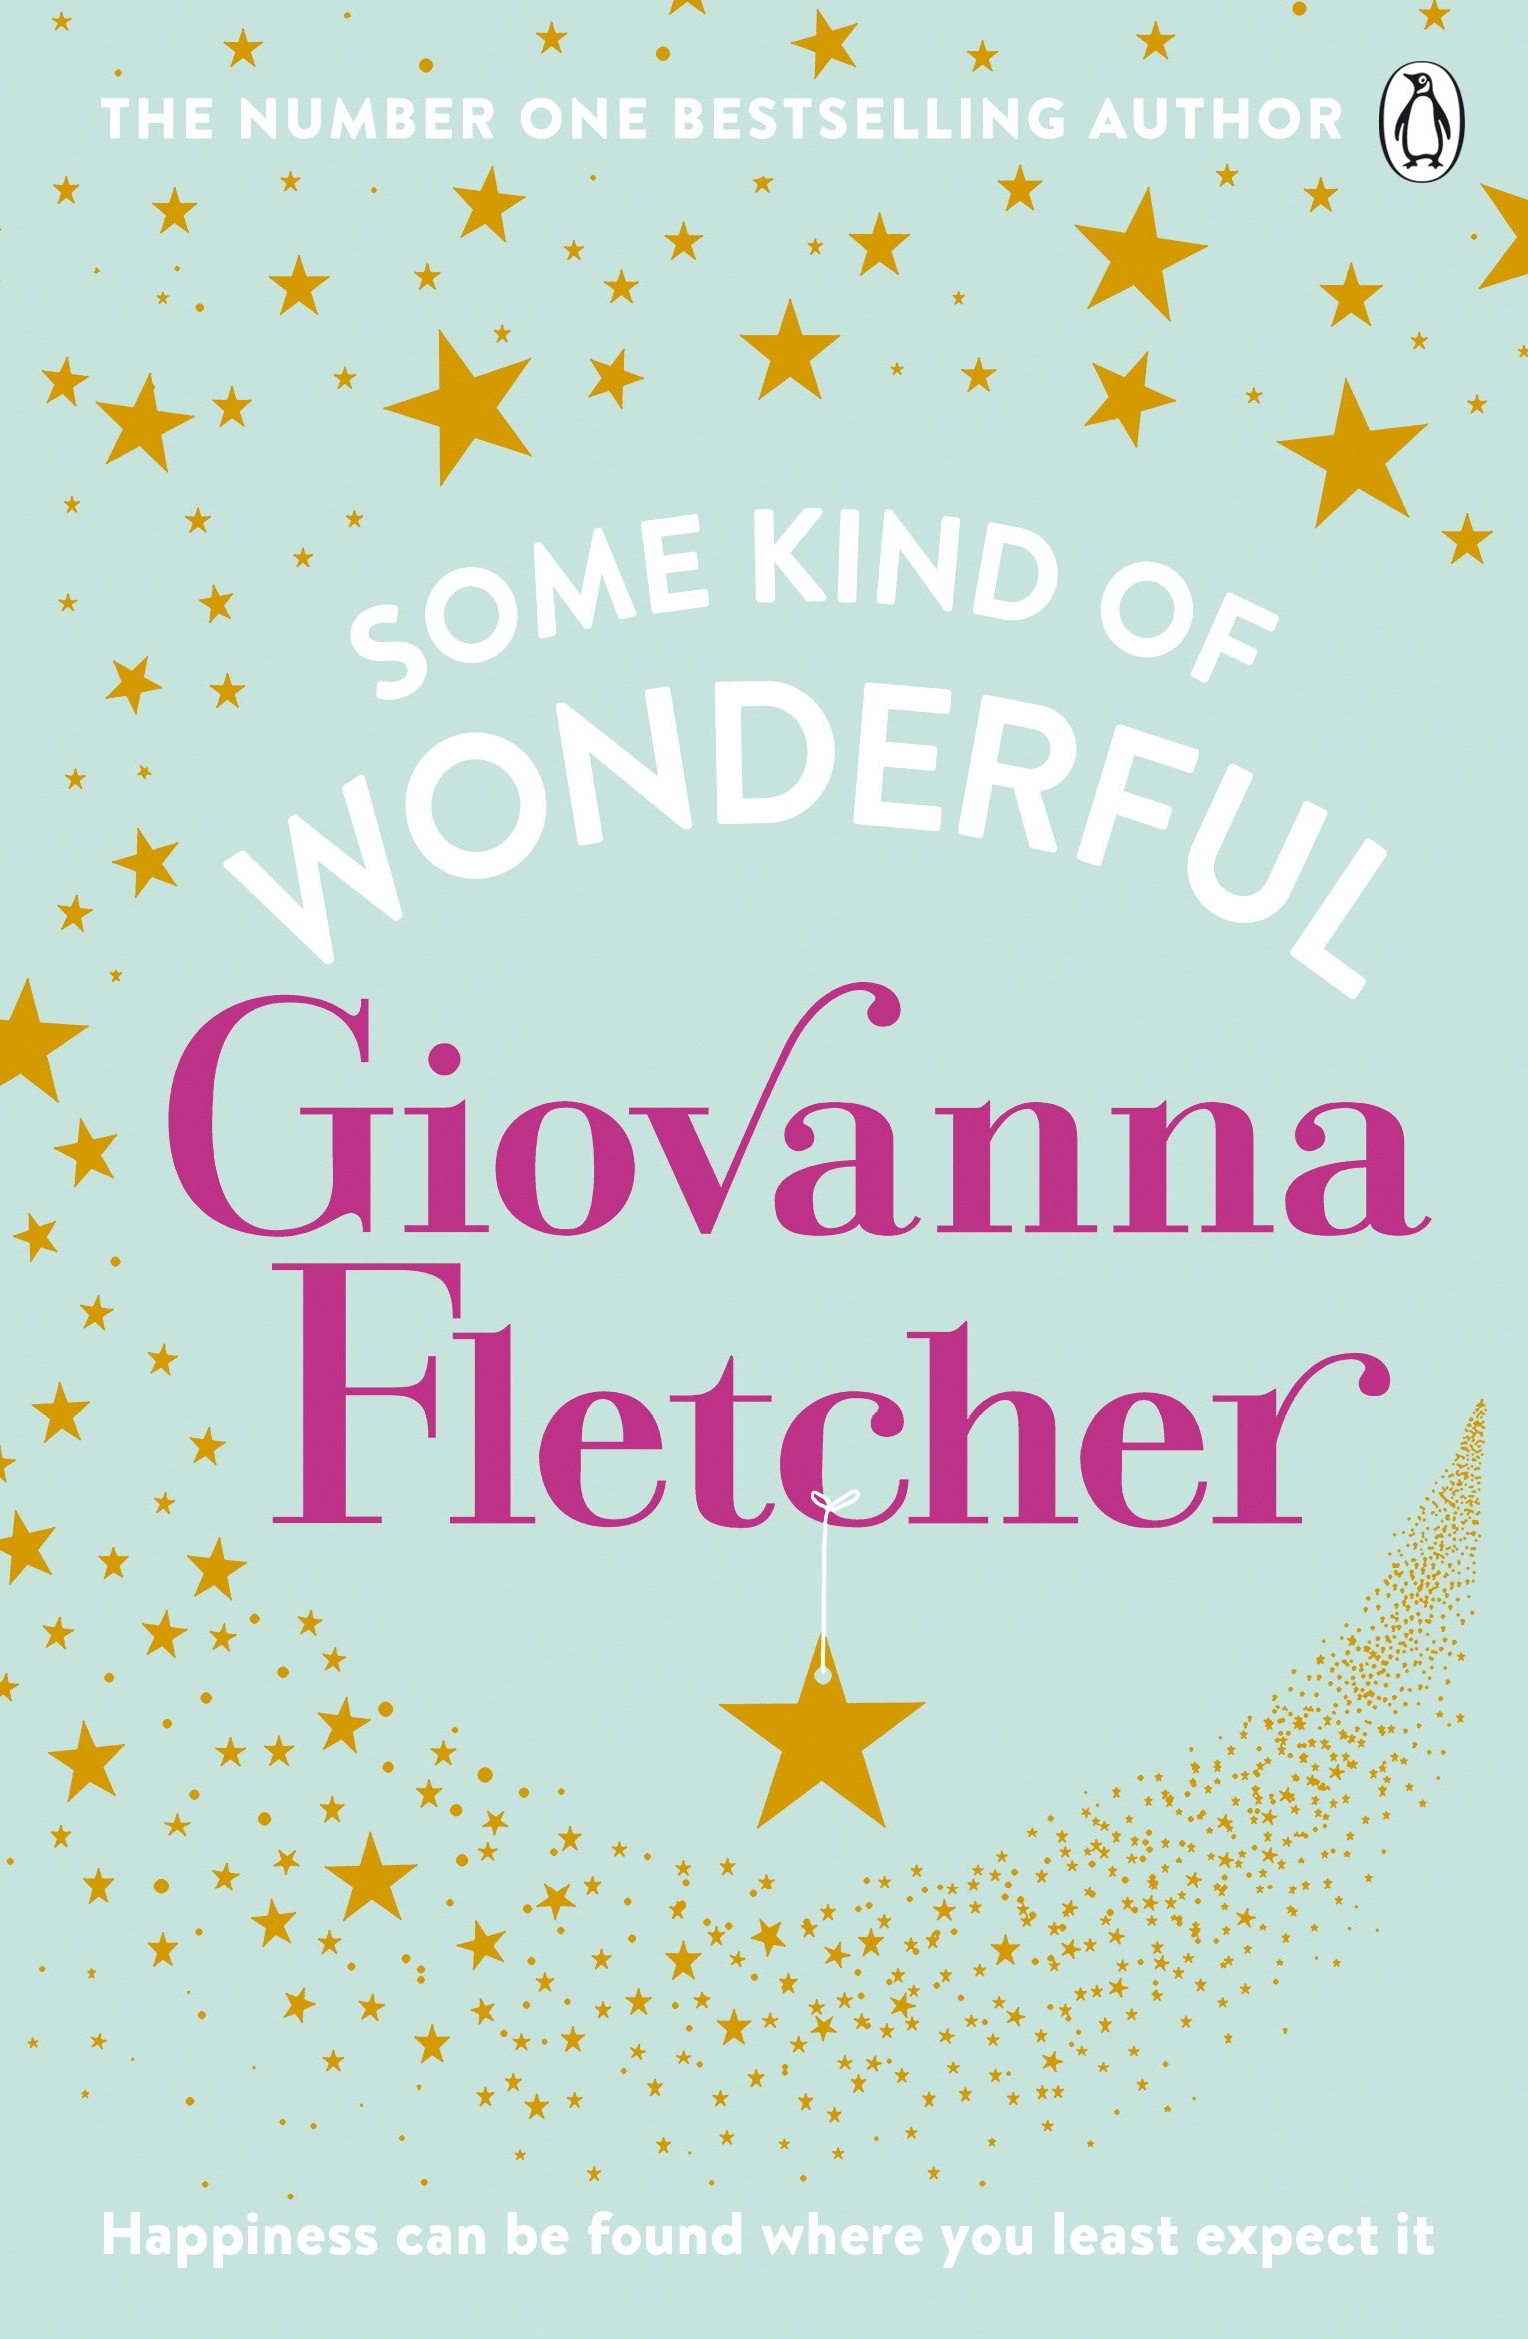 Book “Some Kind of Wonderful” by Giovanna Fletcher — September 6, 2018